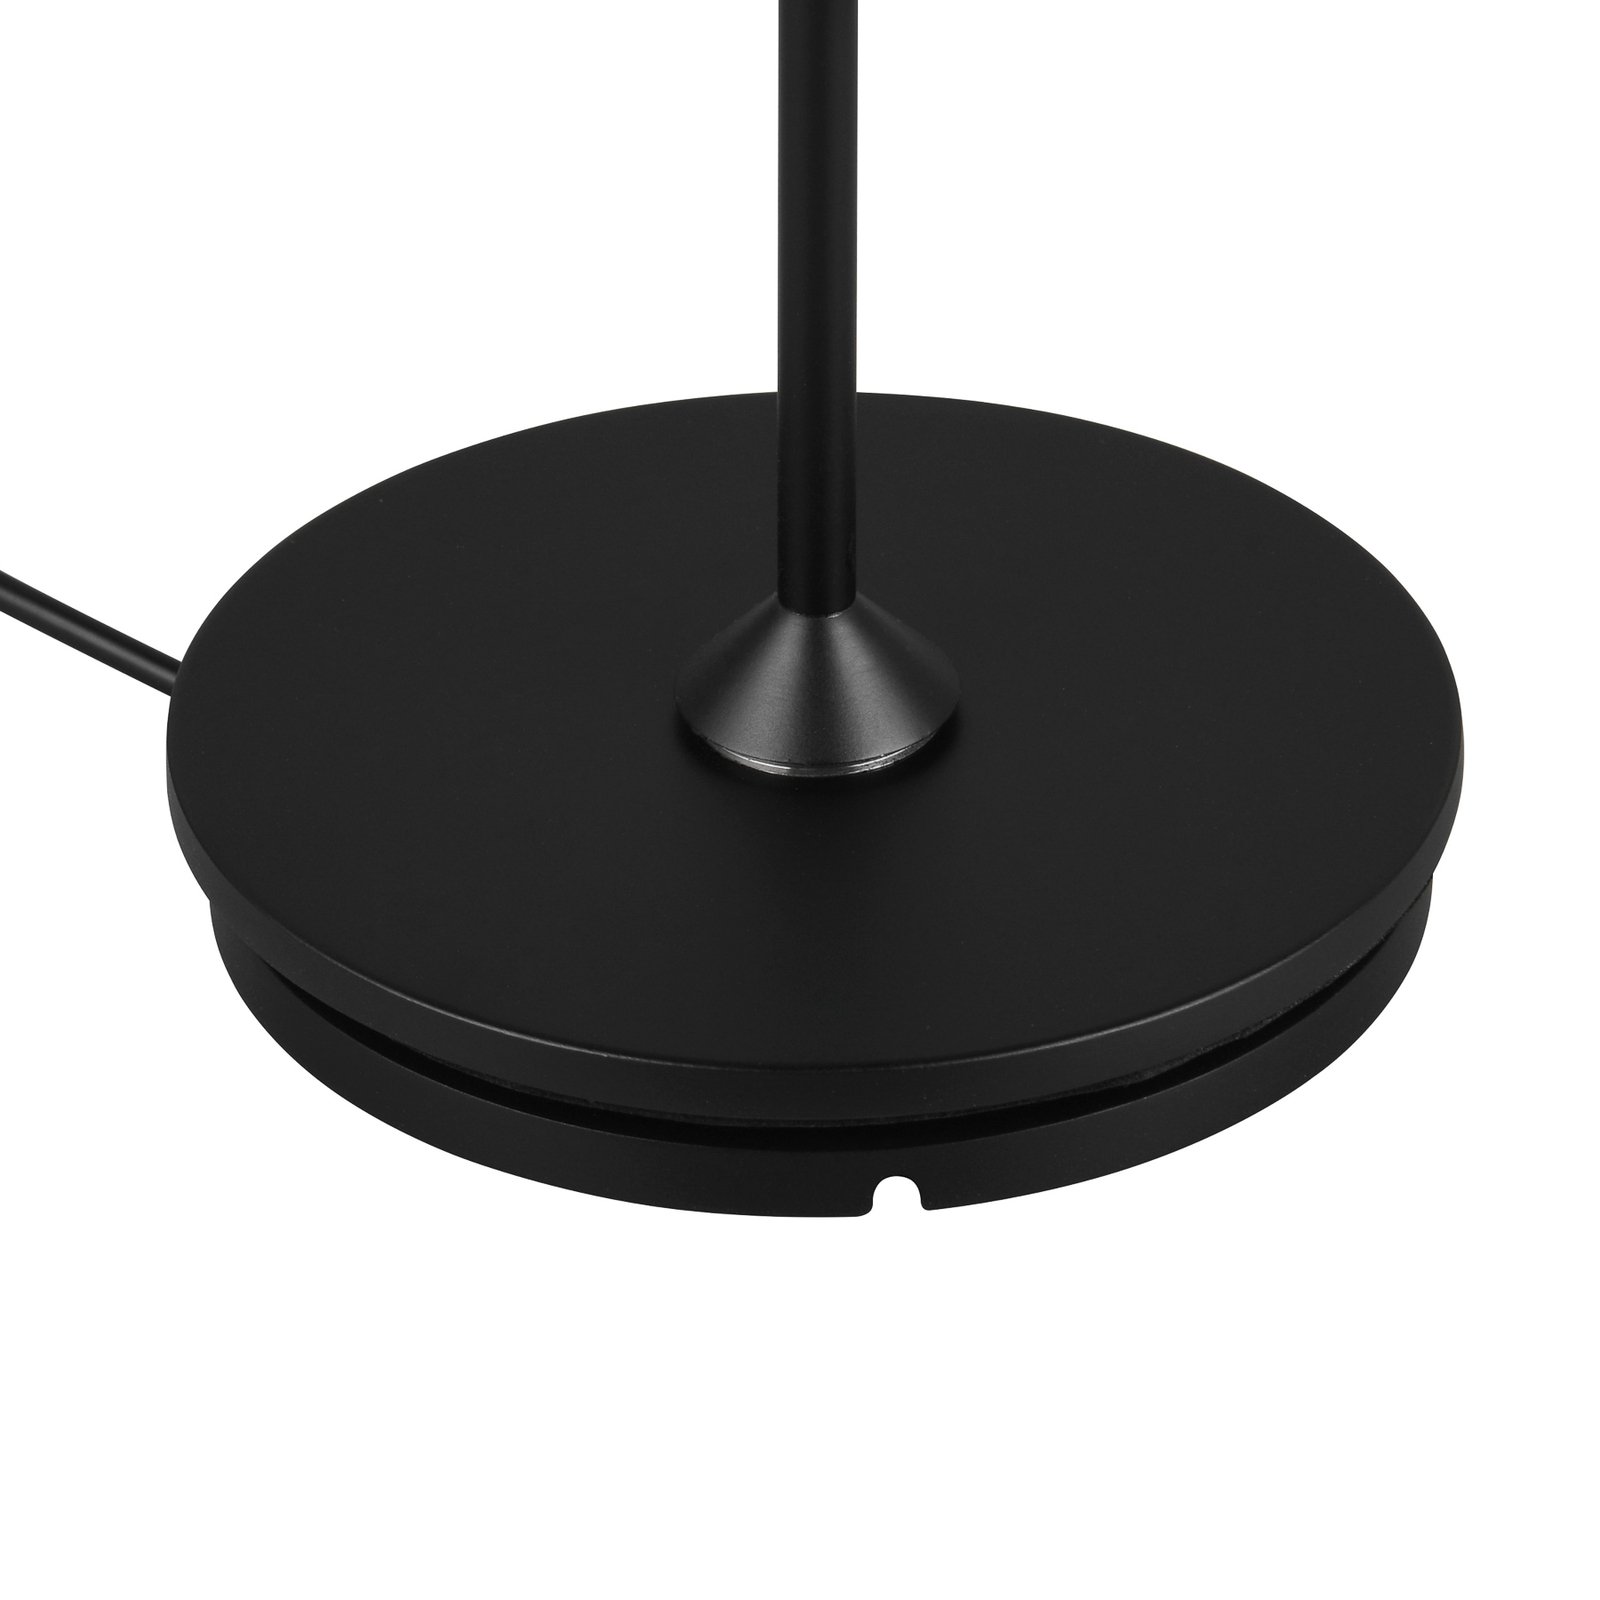 Suarez LED oppladbar bordlampe, svart, høyde 39 cm, metall